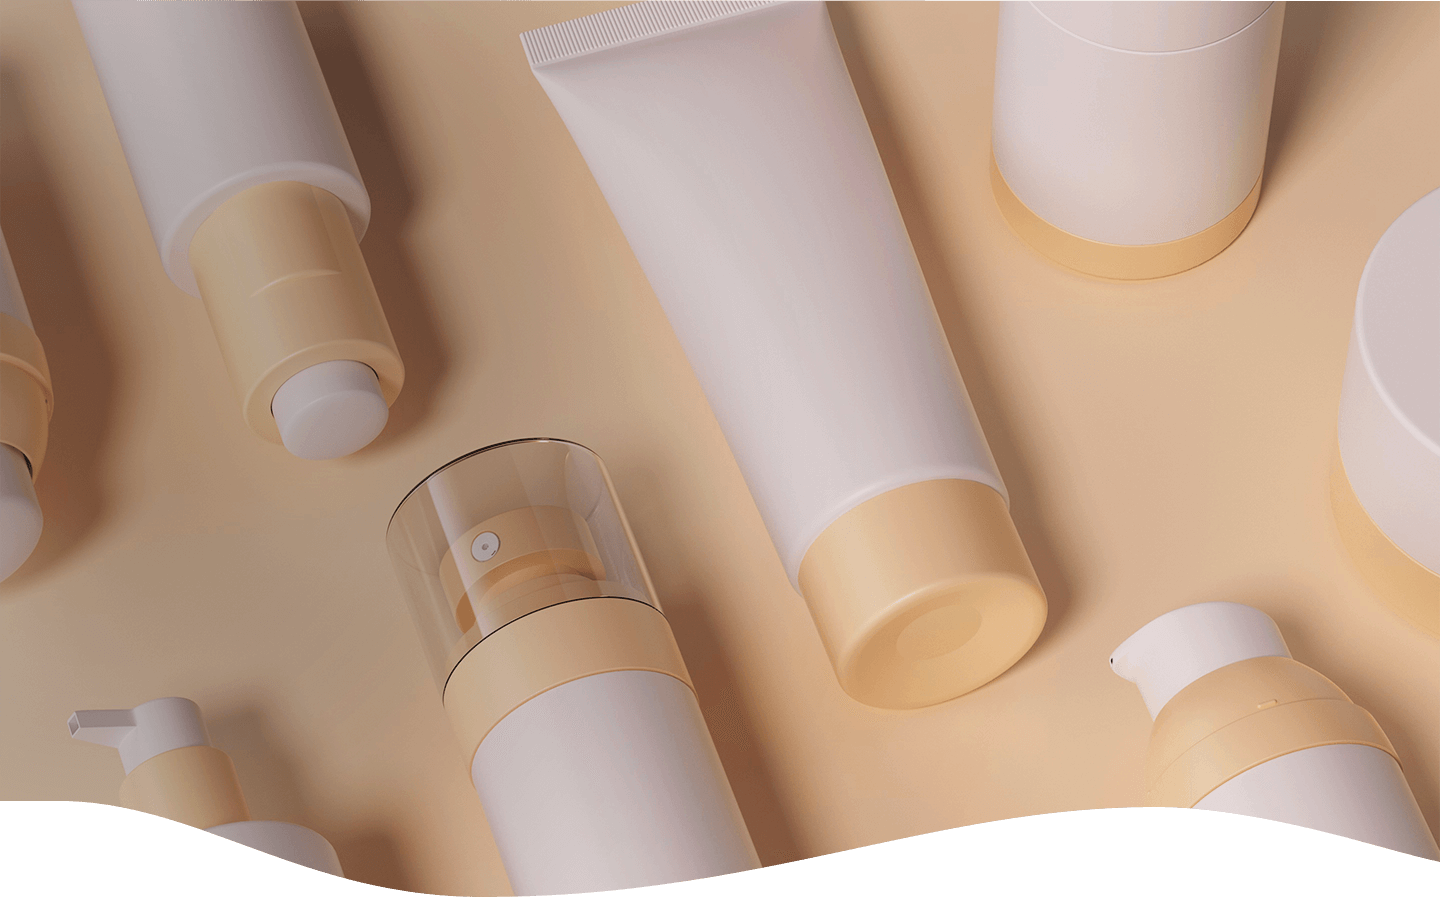 UA Skincare Packaging Supplier